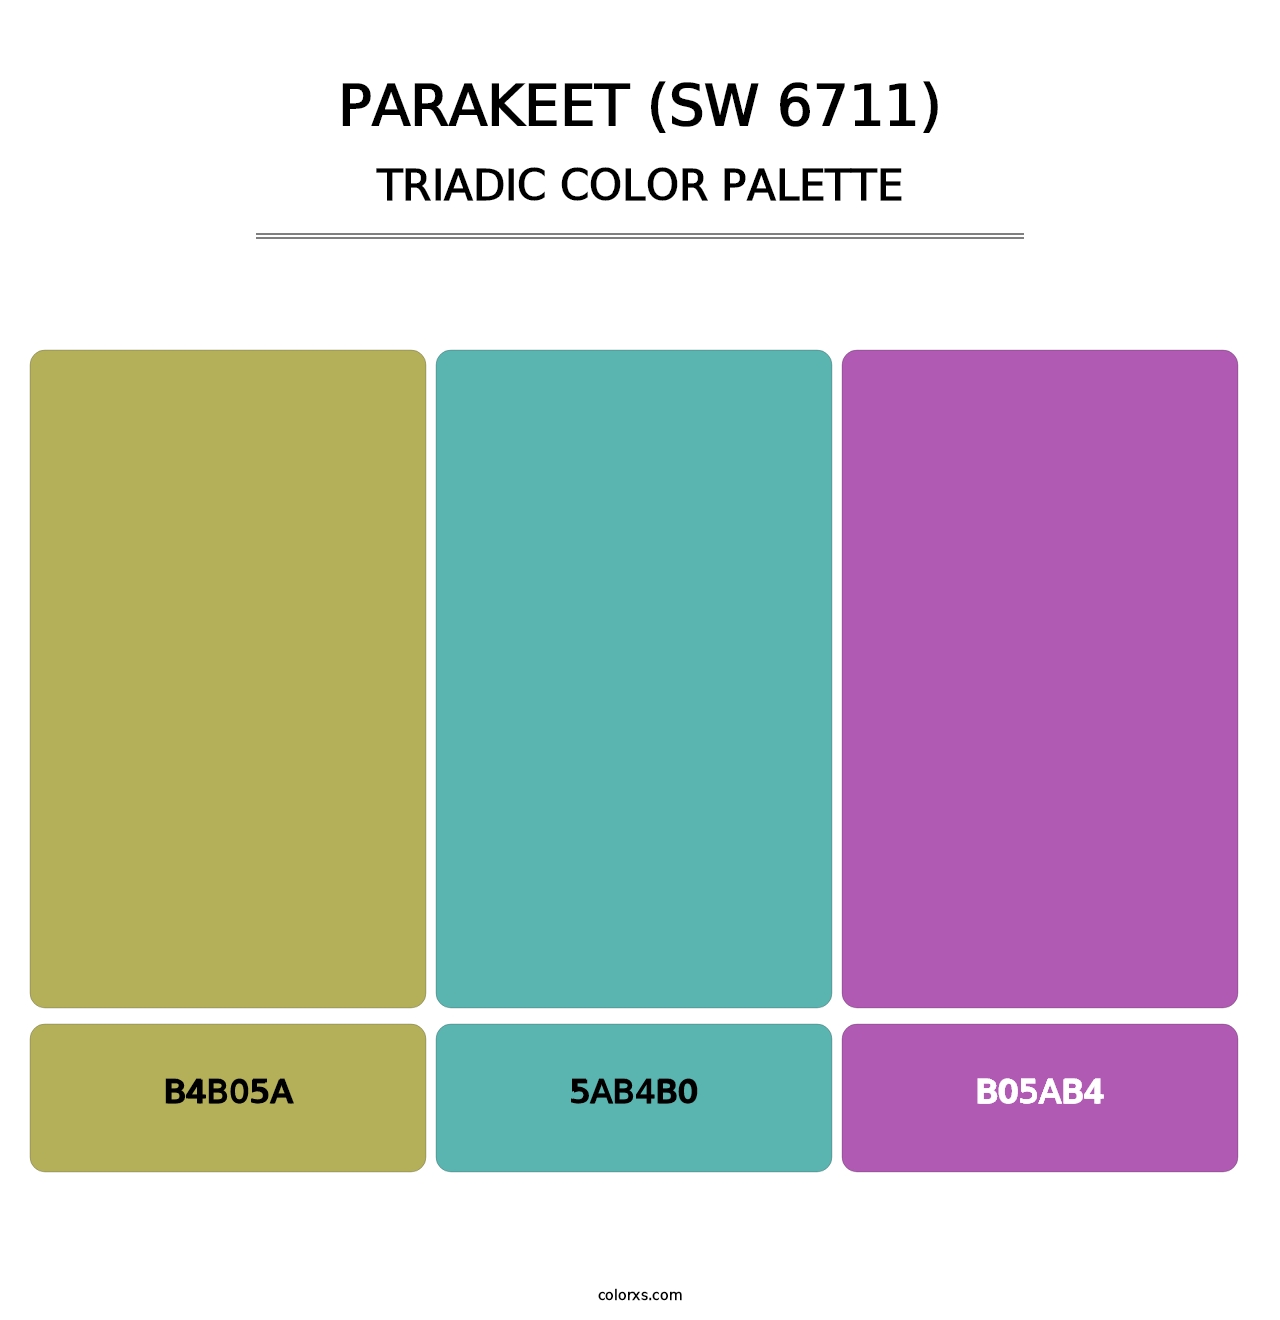 Parakeet (SW 6711) - Triadic Color Palette